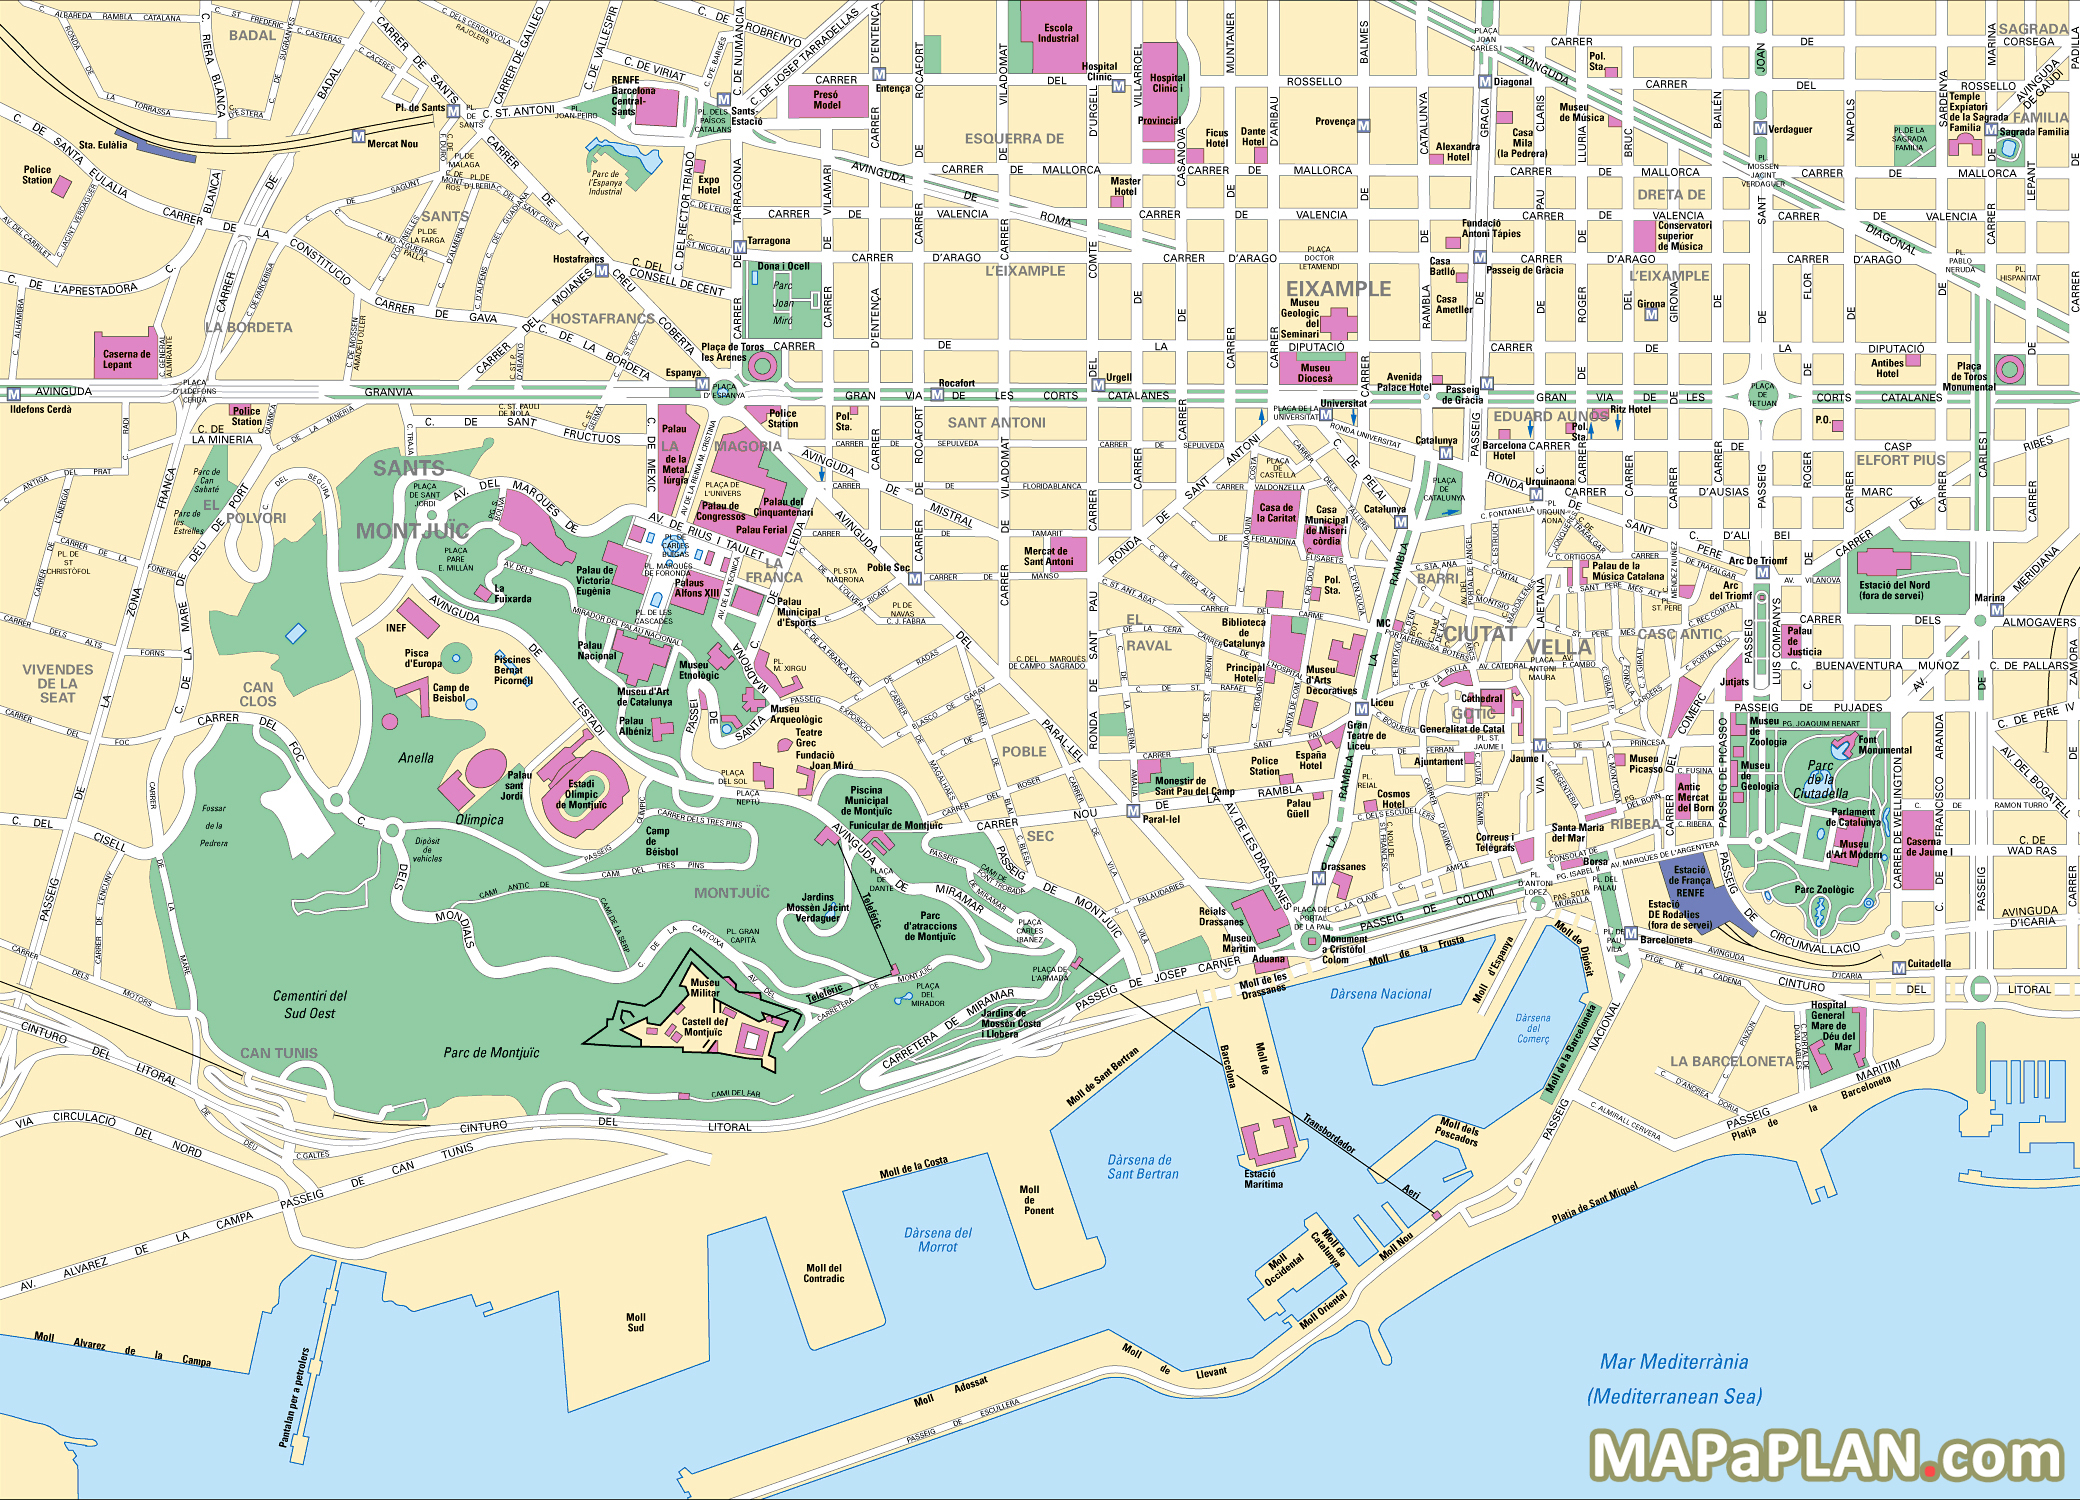 Barcelona maps Top tourist attractions - printable city map MapaPlan.com